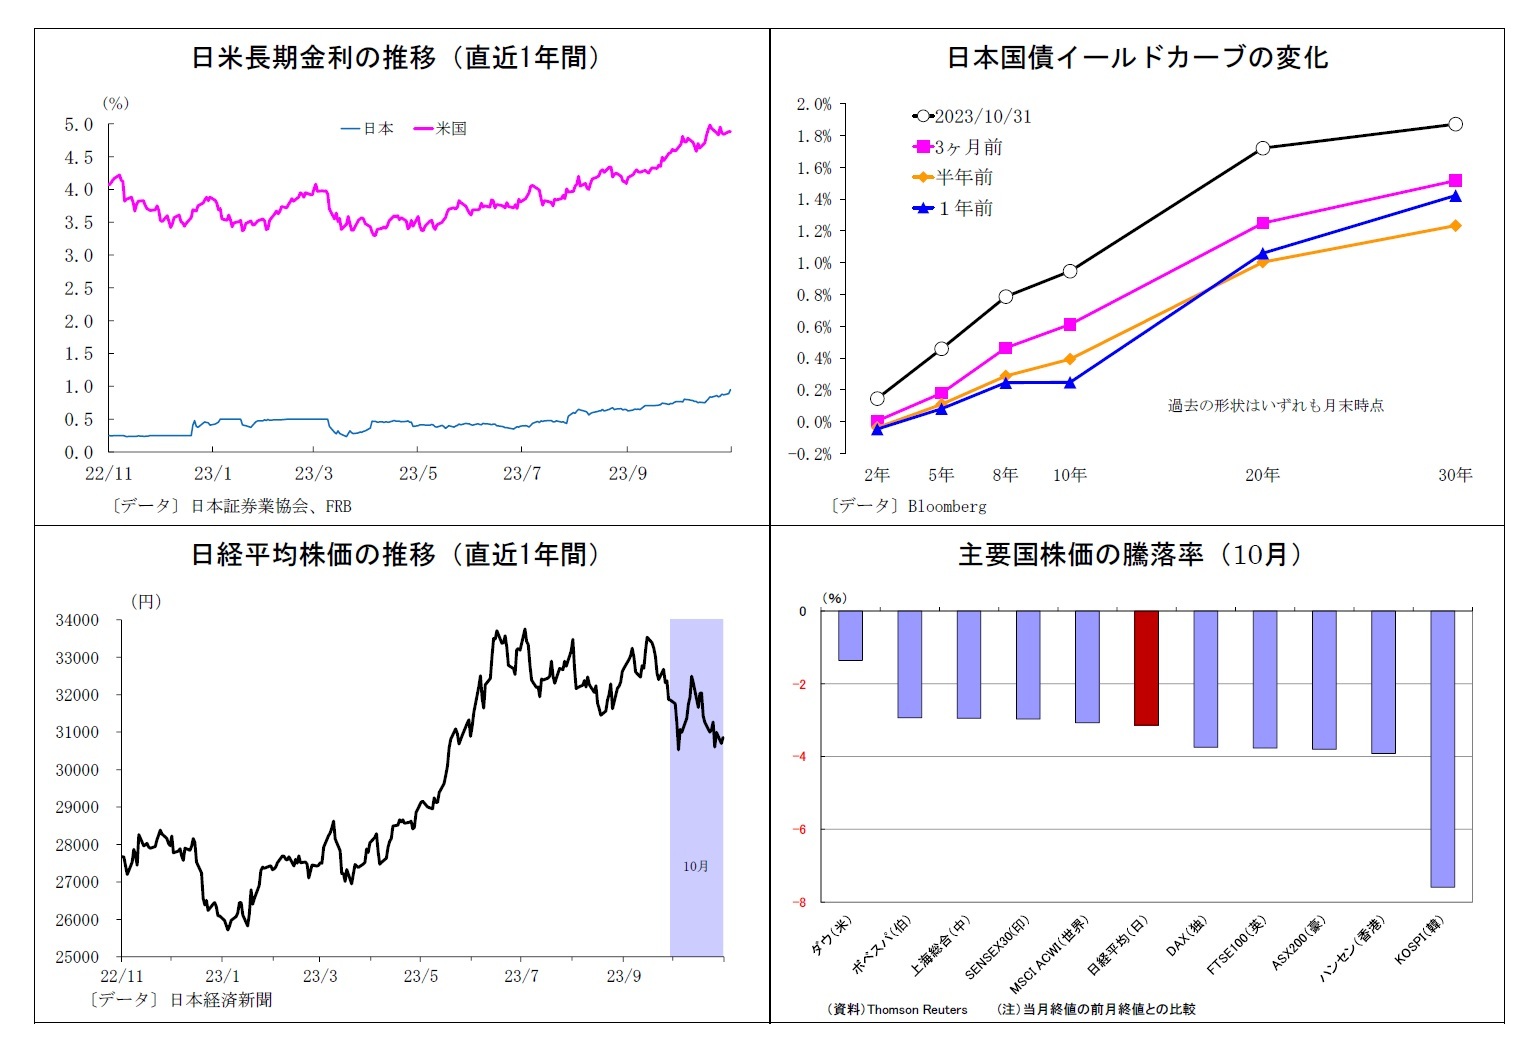 日米長期金利の推移（直近1年間）/日本国債イールドカーブの変化/日経平均株価の推移（直近1年間）/主要国株価の騰落率（10月）